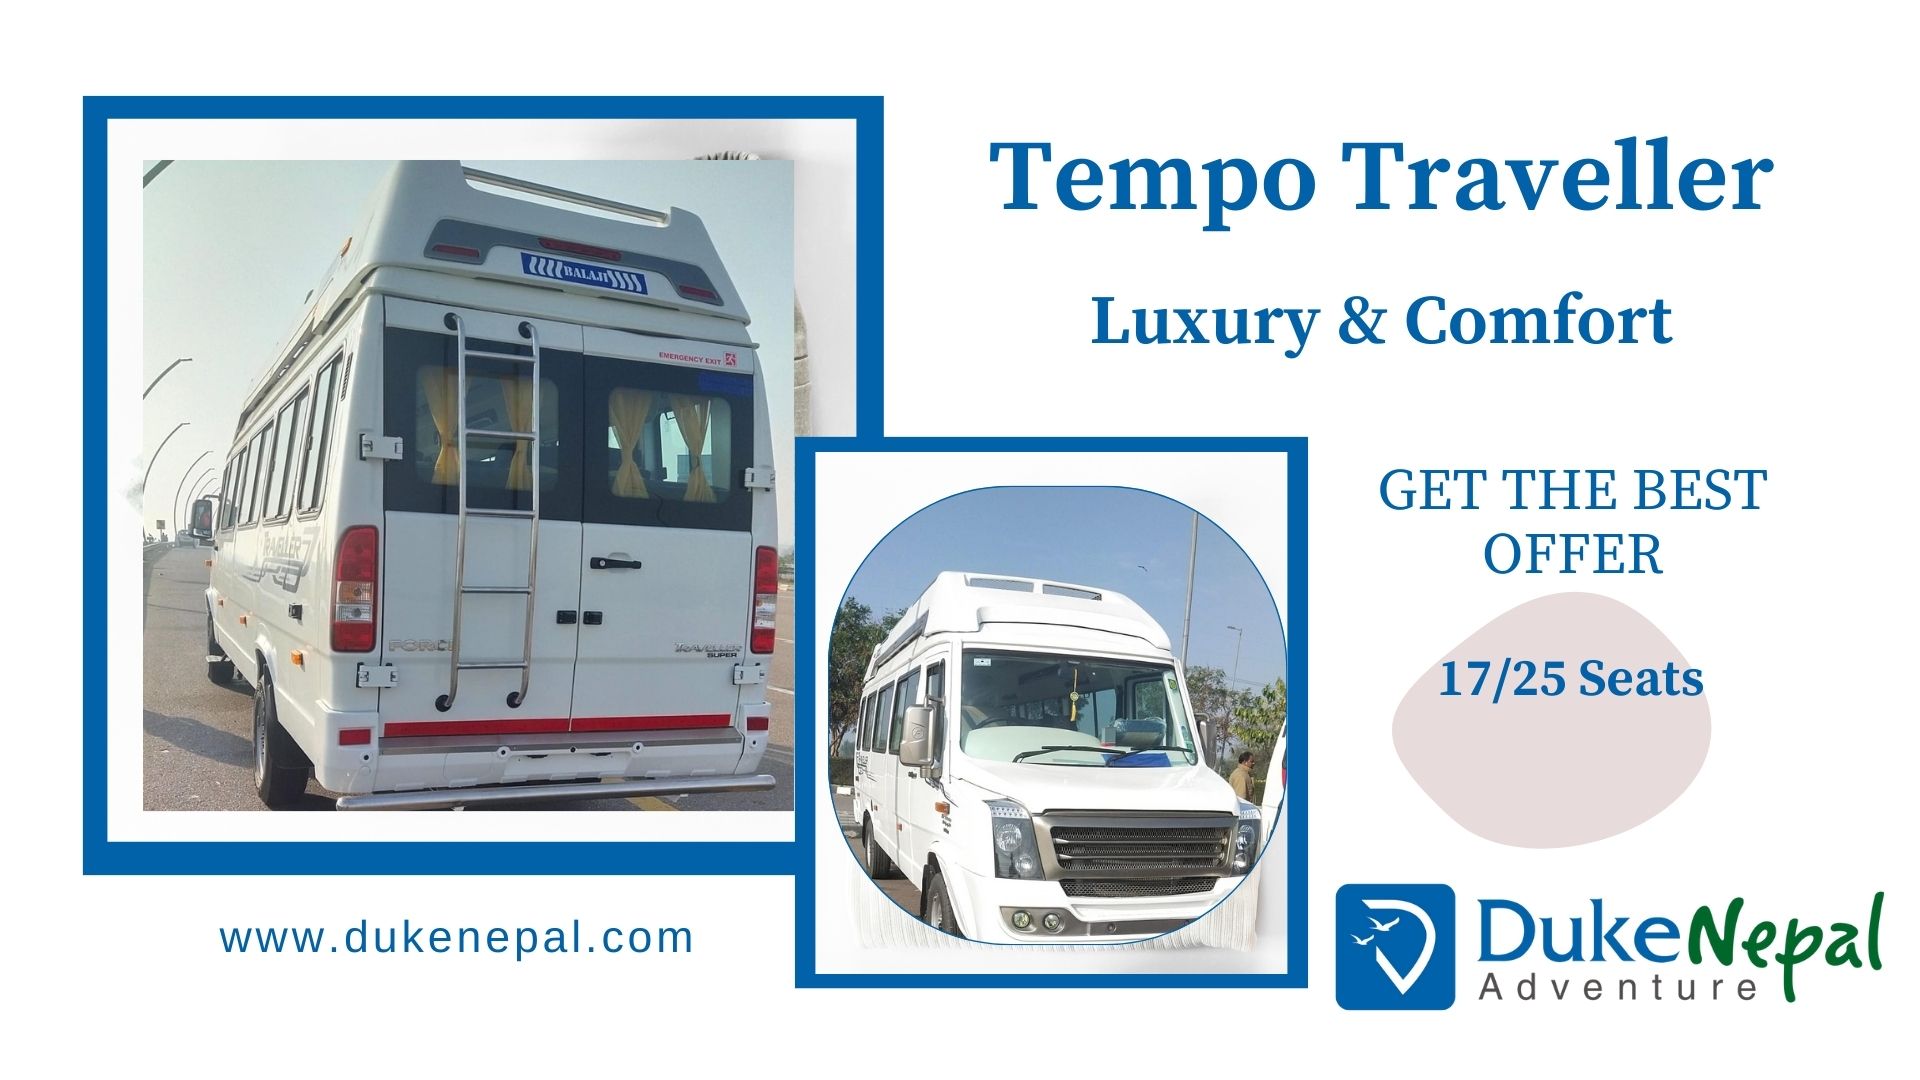 Tempo Traveler rental in gorakhpur and sunauli